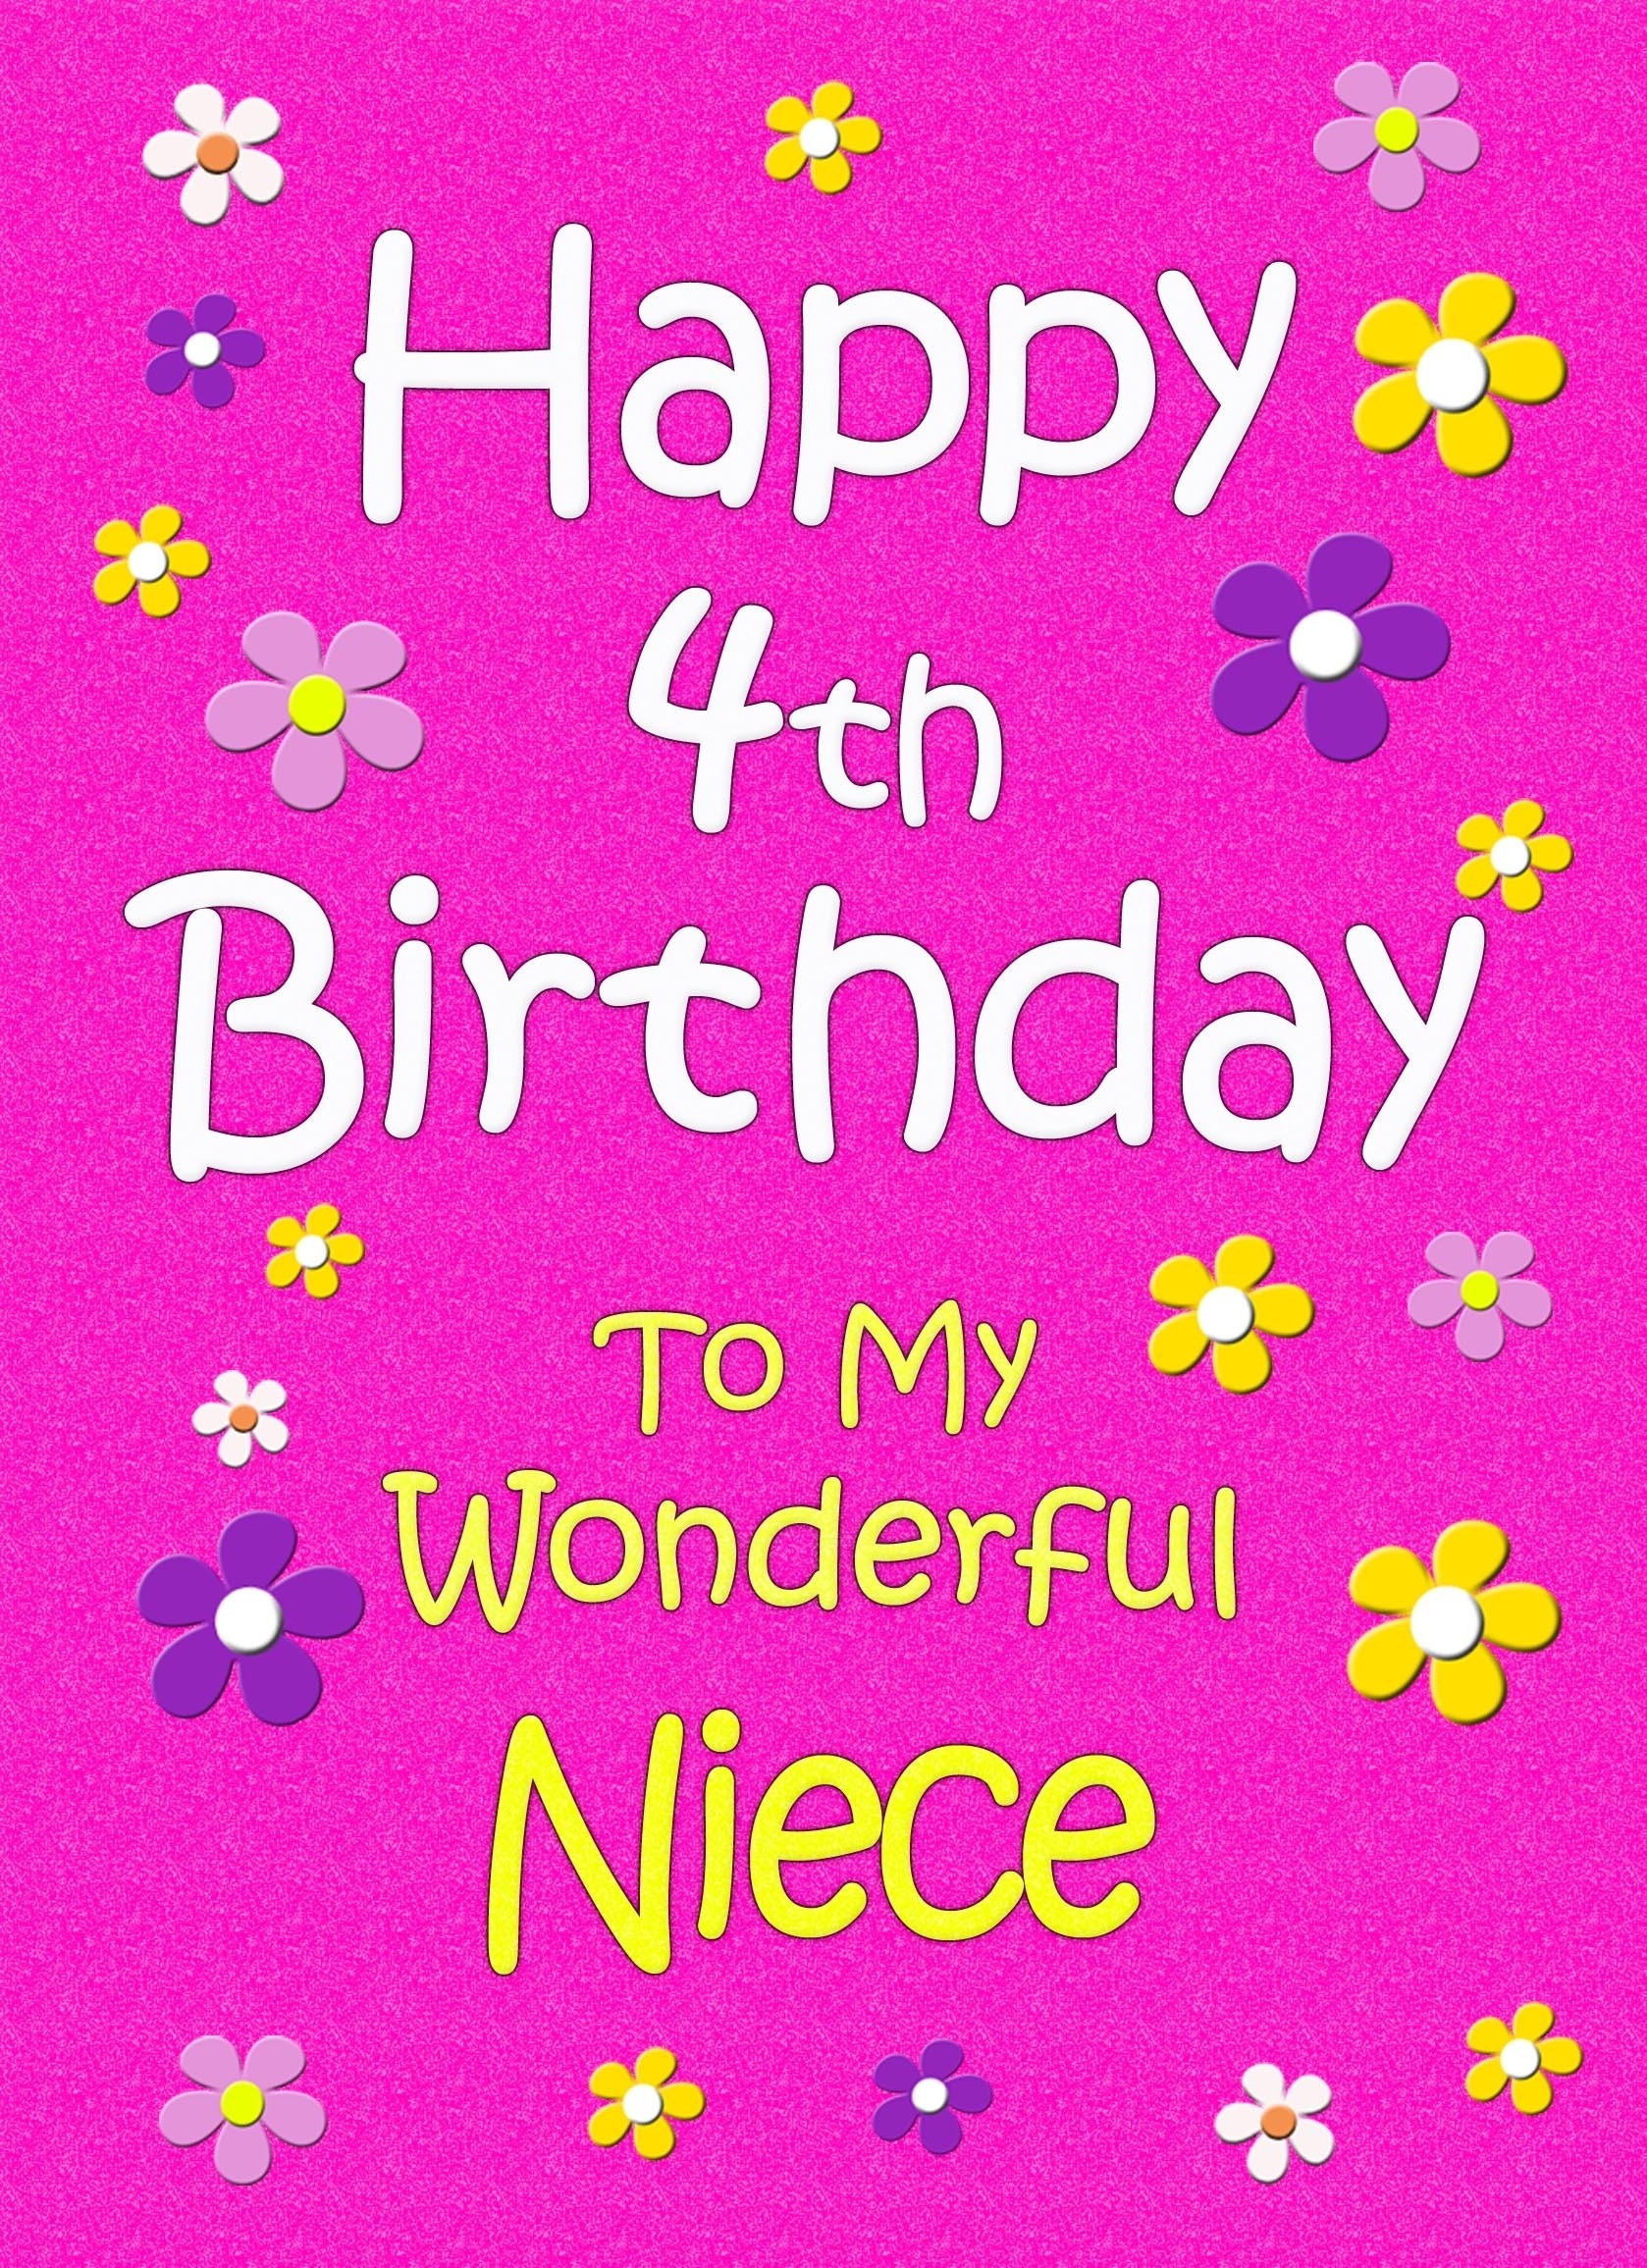 Niece 4th Birthday Card (Pink)